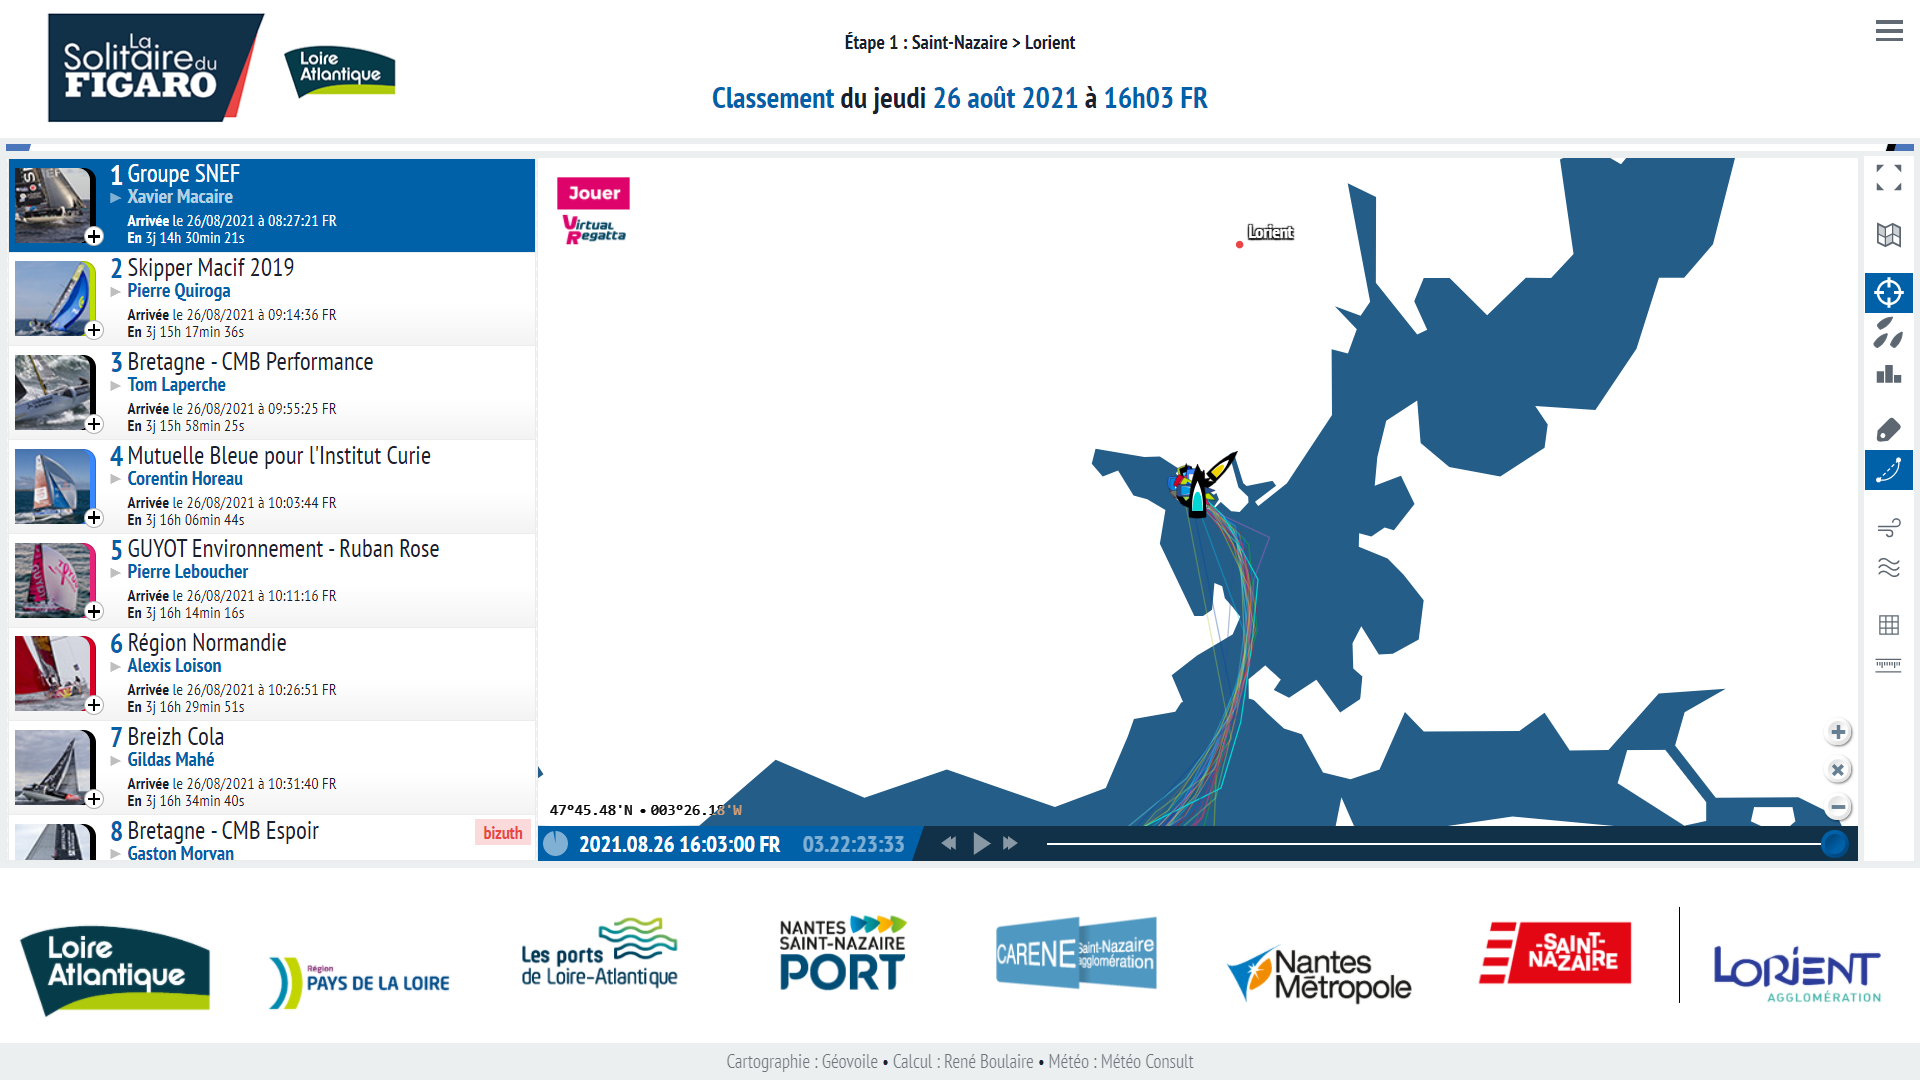 Lorient Solitaire du Figaro : cartographie en direct